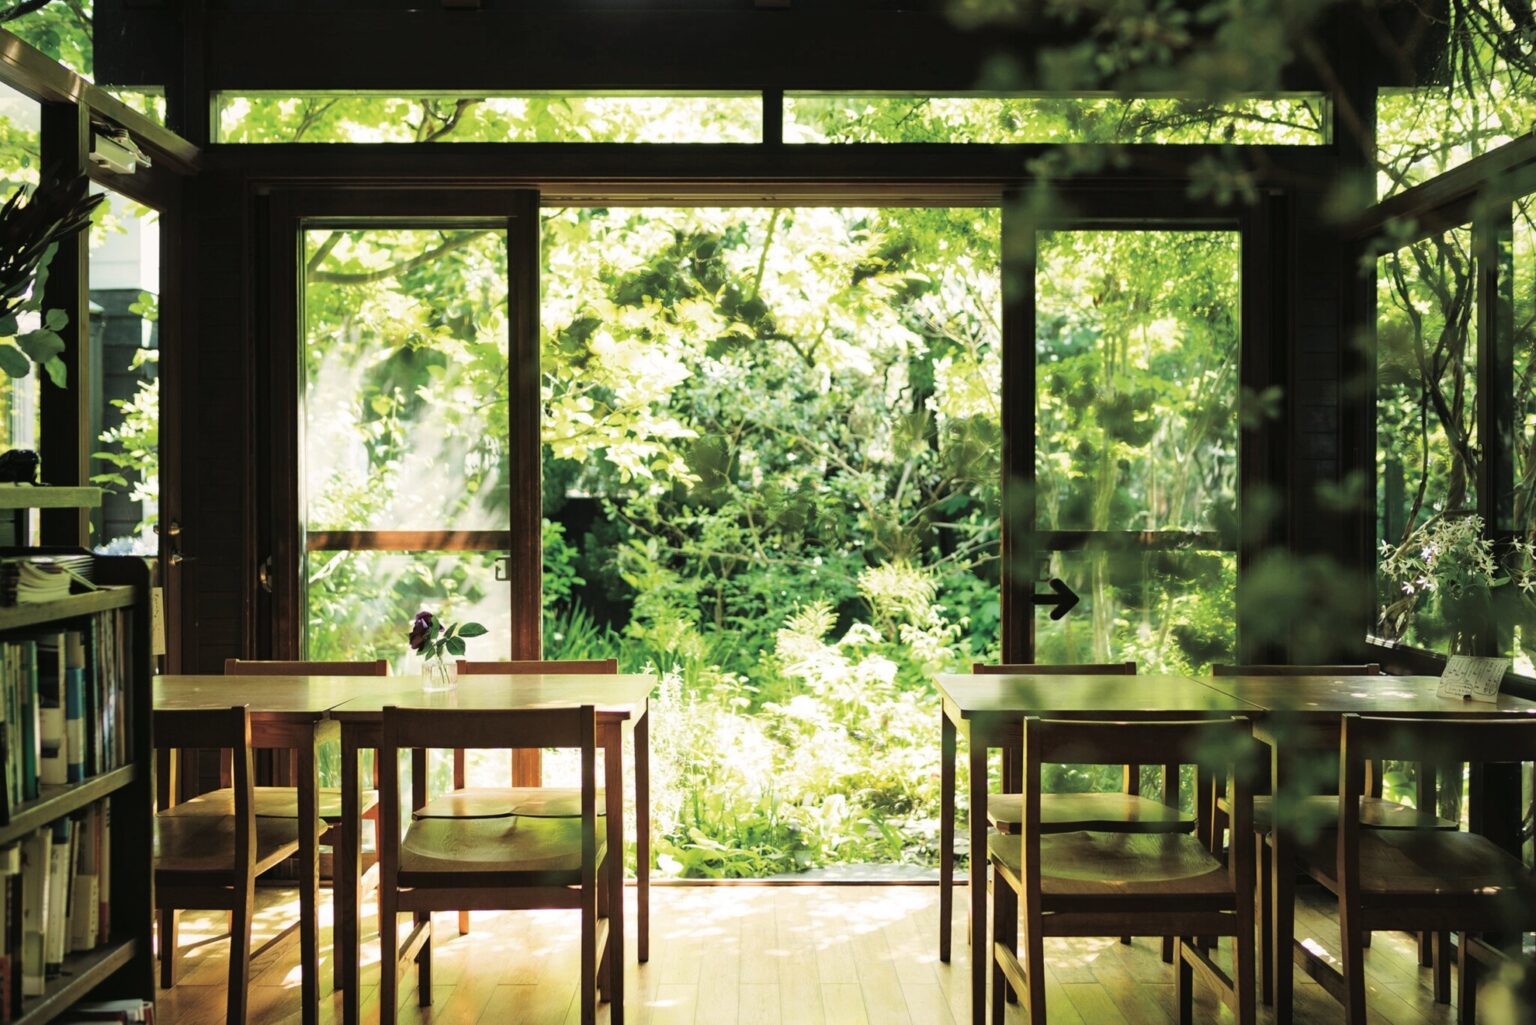 〈cafe kaeru〉はモダンな意匠が時を経て深みを増したオーナーの自邸の一部をリノベーション。カフェとして開放したサンルームの窓からは、庭の緑を望む。